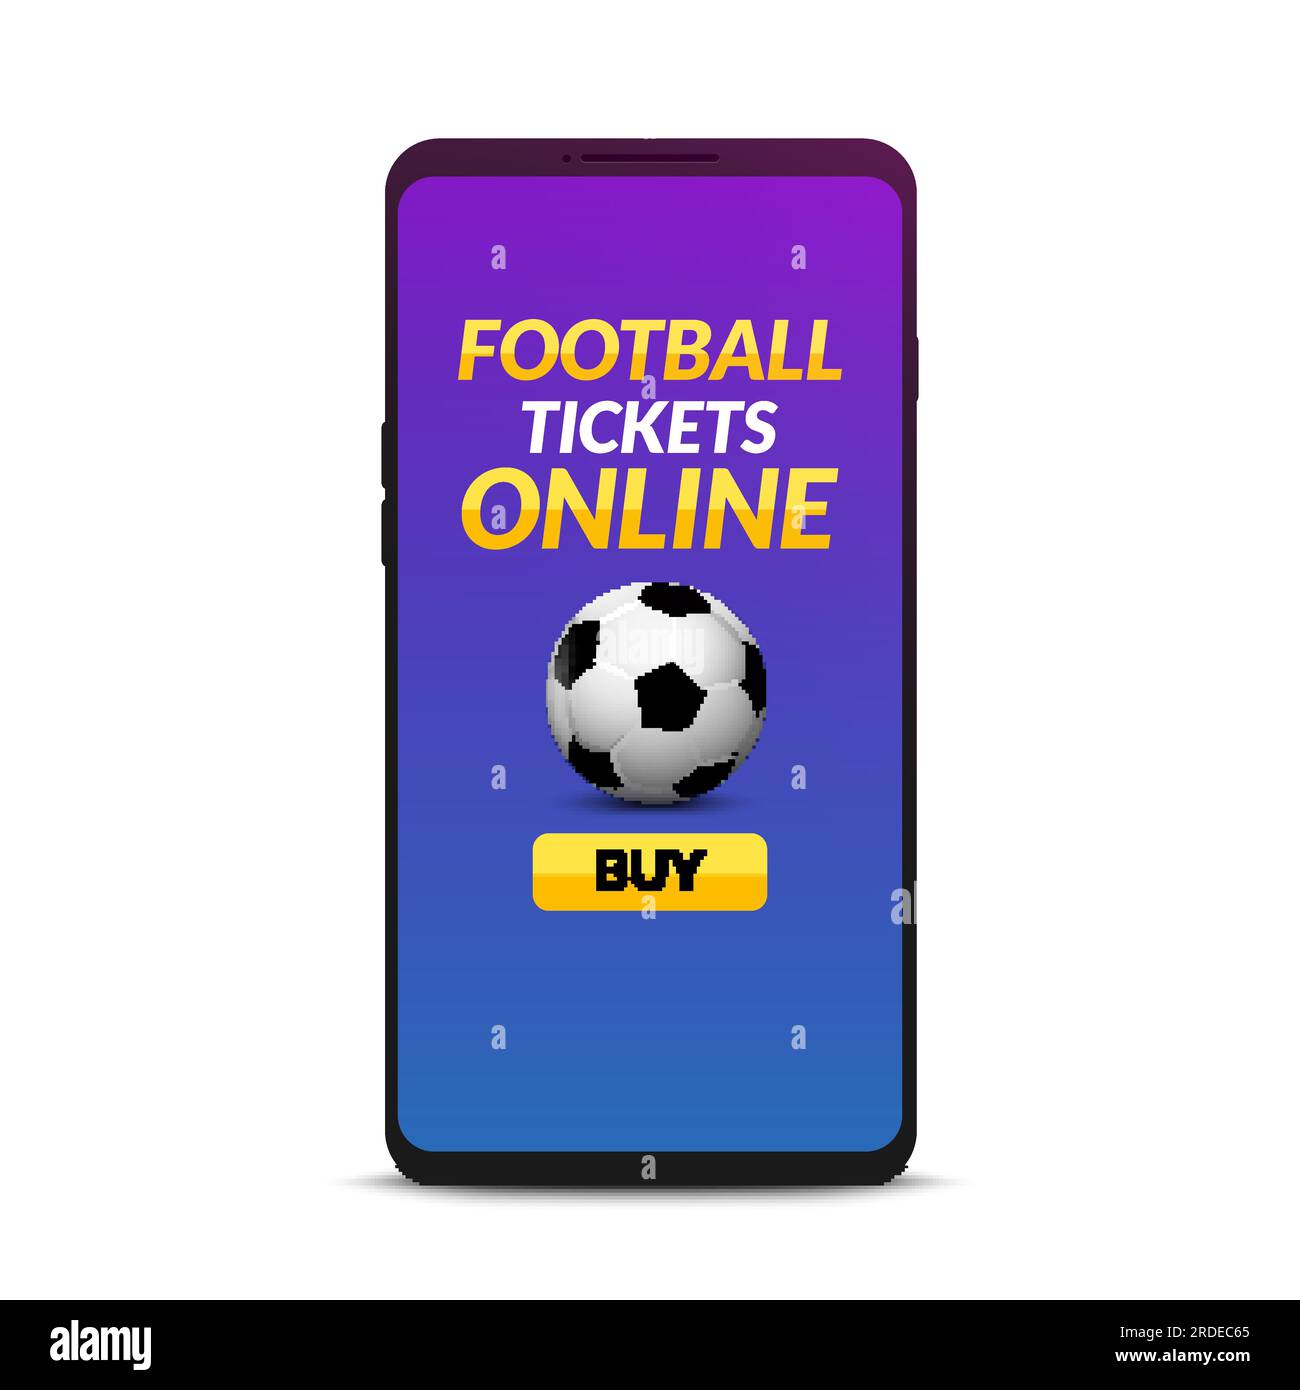 Football ticket online booking